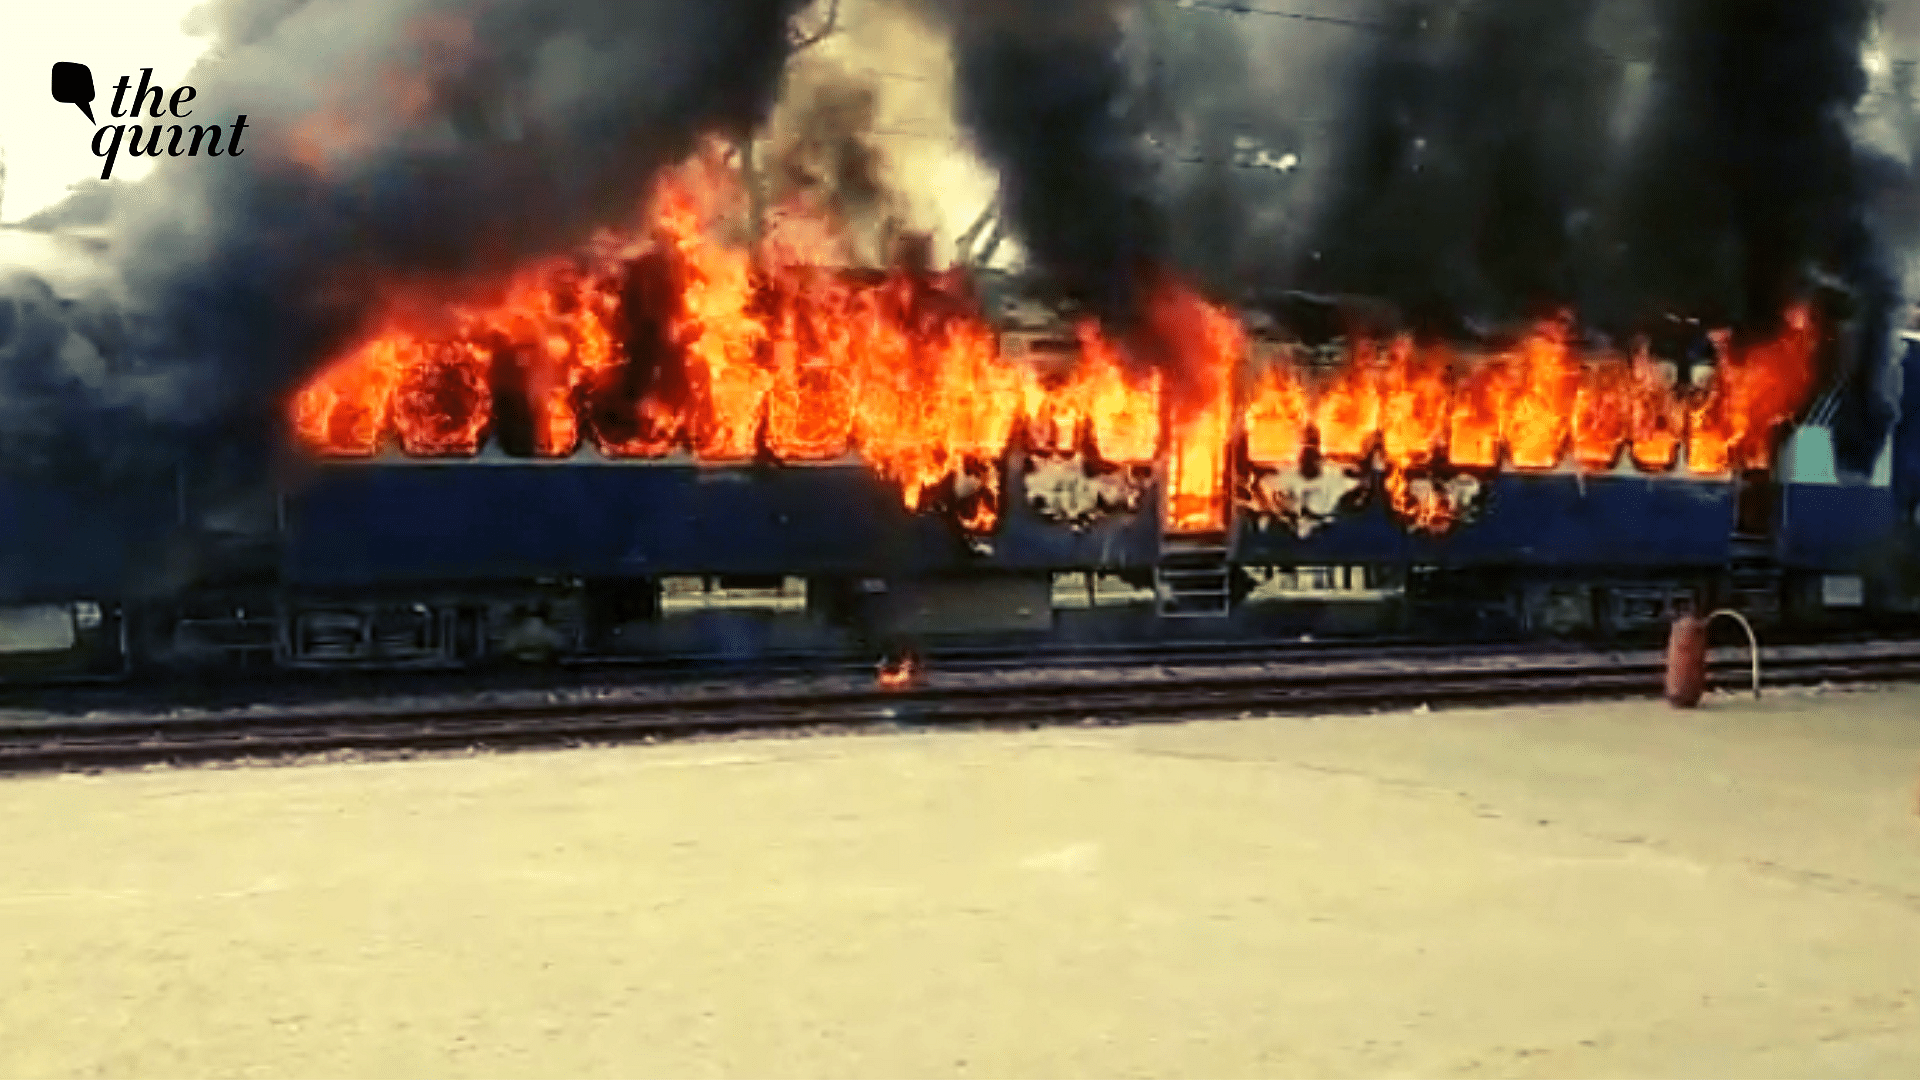 <div class="paragraphs"><p>A train set ablaze by protesters in Bihar's Chapra on Thursday, 16 June.</p></div>